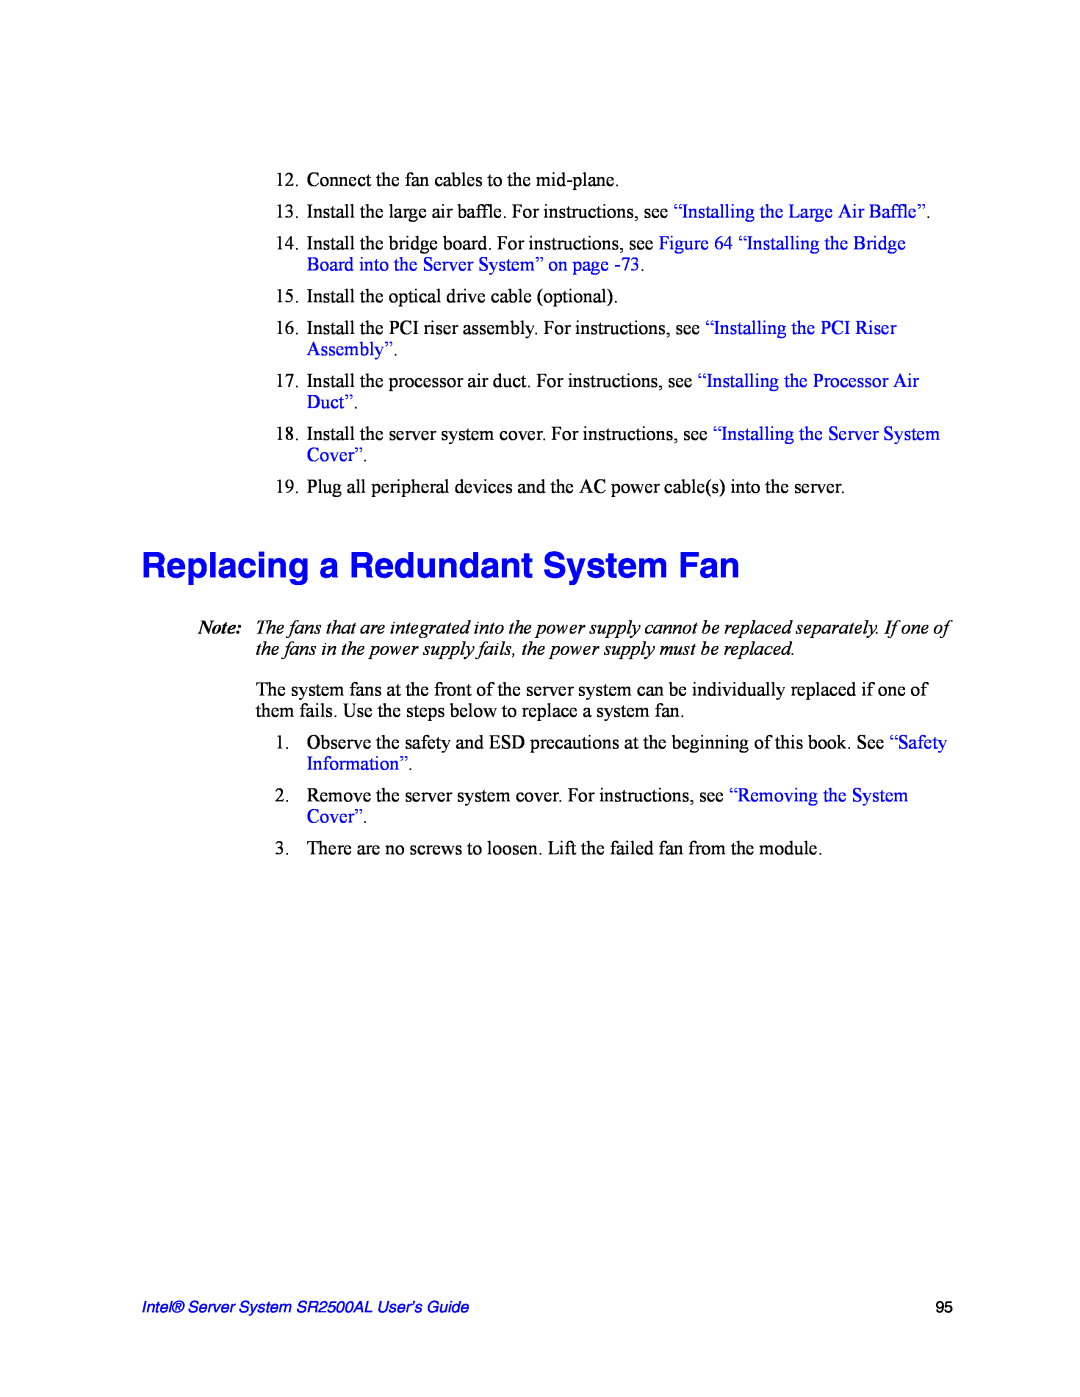 Intel SR2500AL manual Replacing a Redundant System Fan 